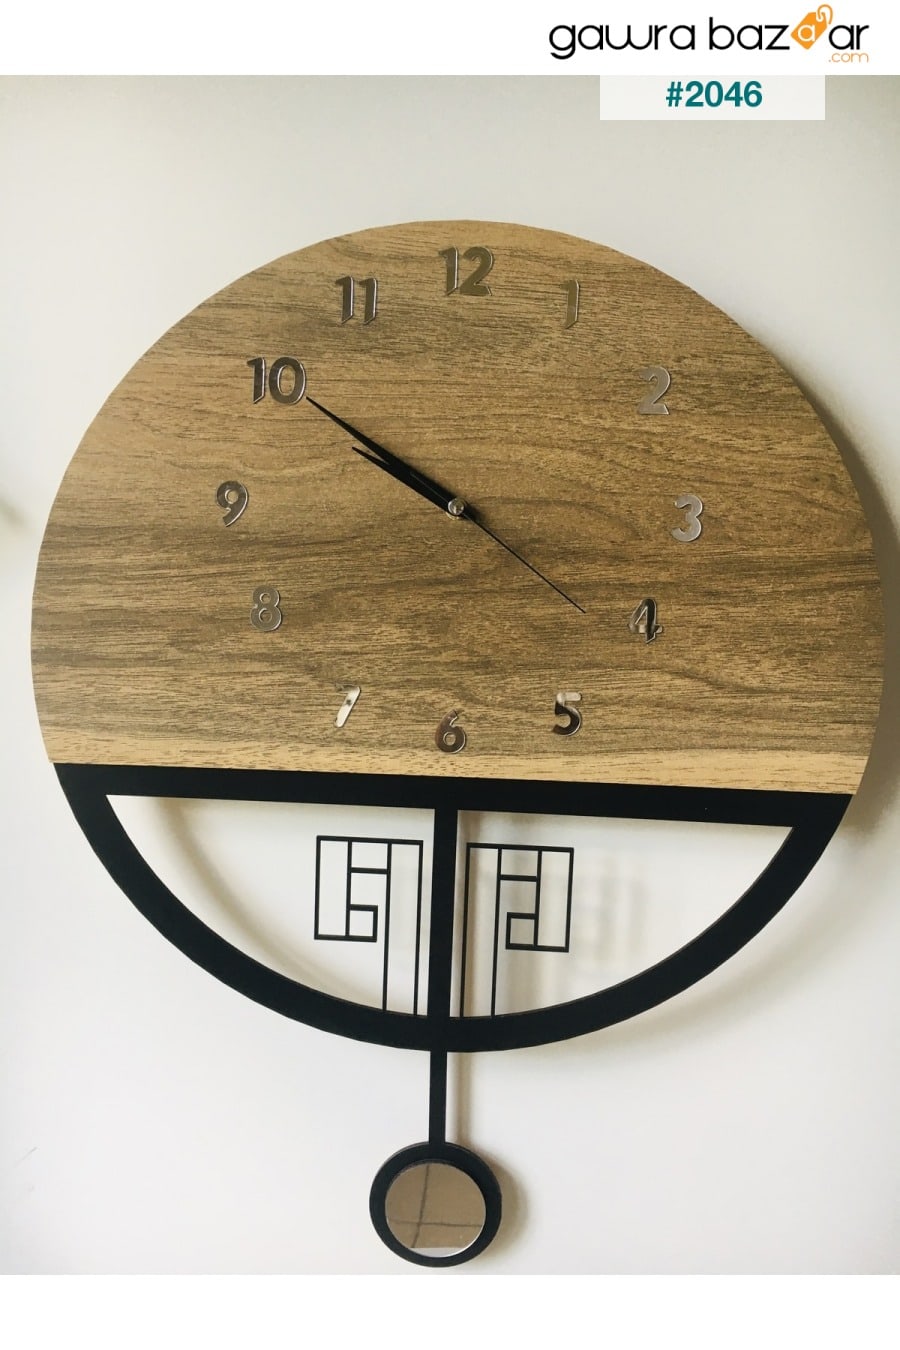 ساعة حائط خشبية بندول صامت ، ساعة بندول ، ساعة حائط ، ساعة حائط خشبية ، ساعة حائط بندول hayalevimahsap 2